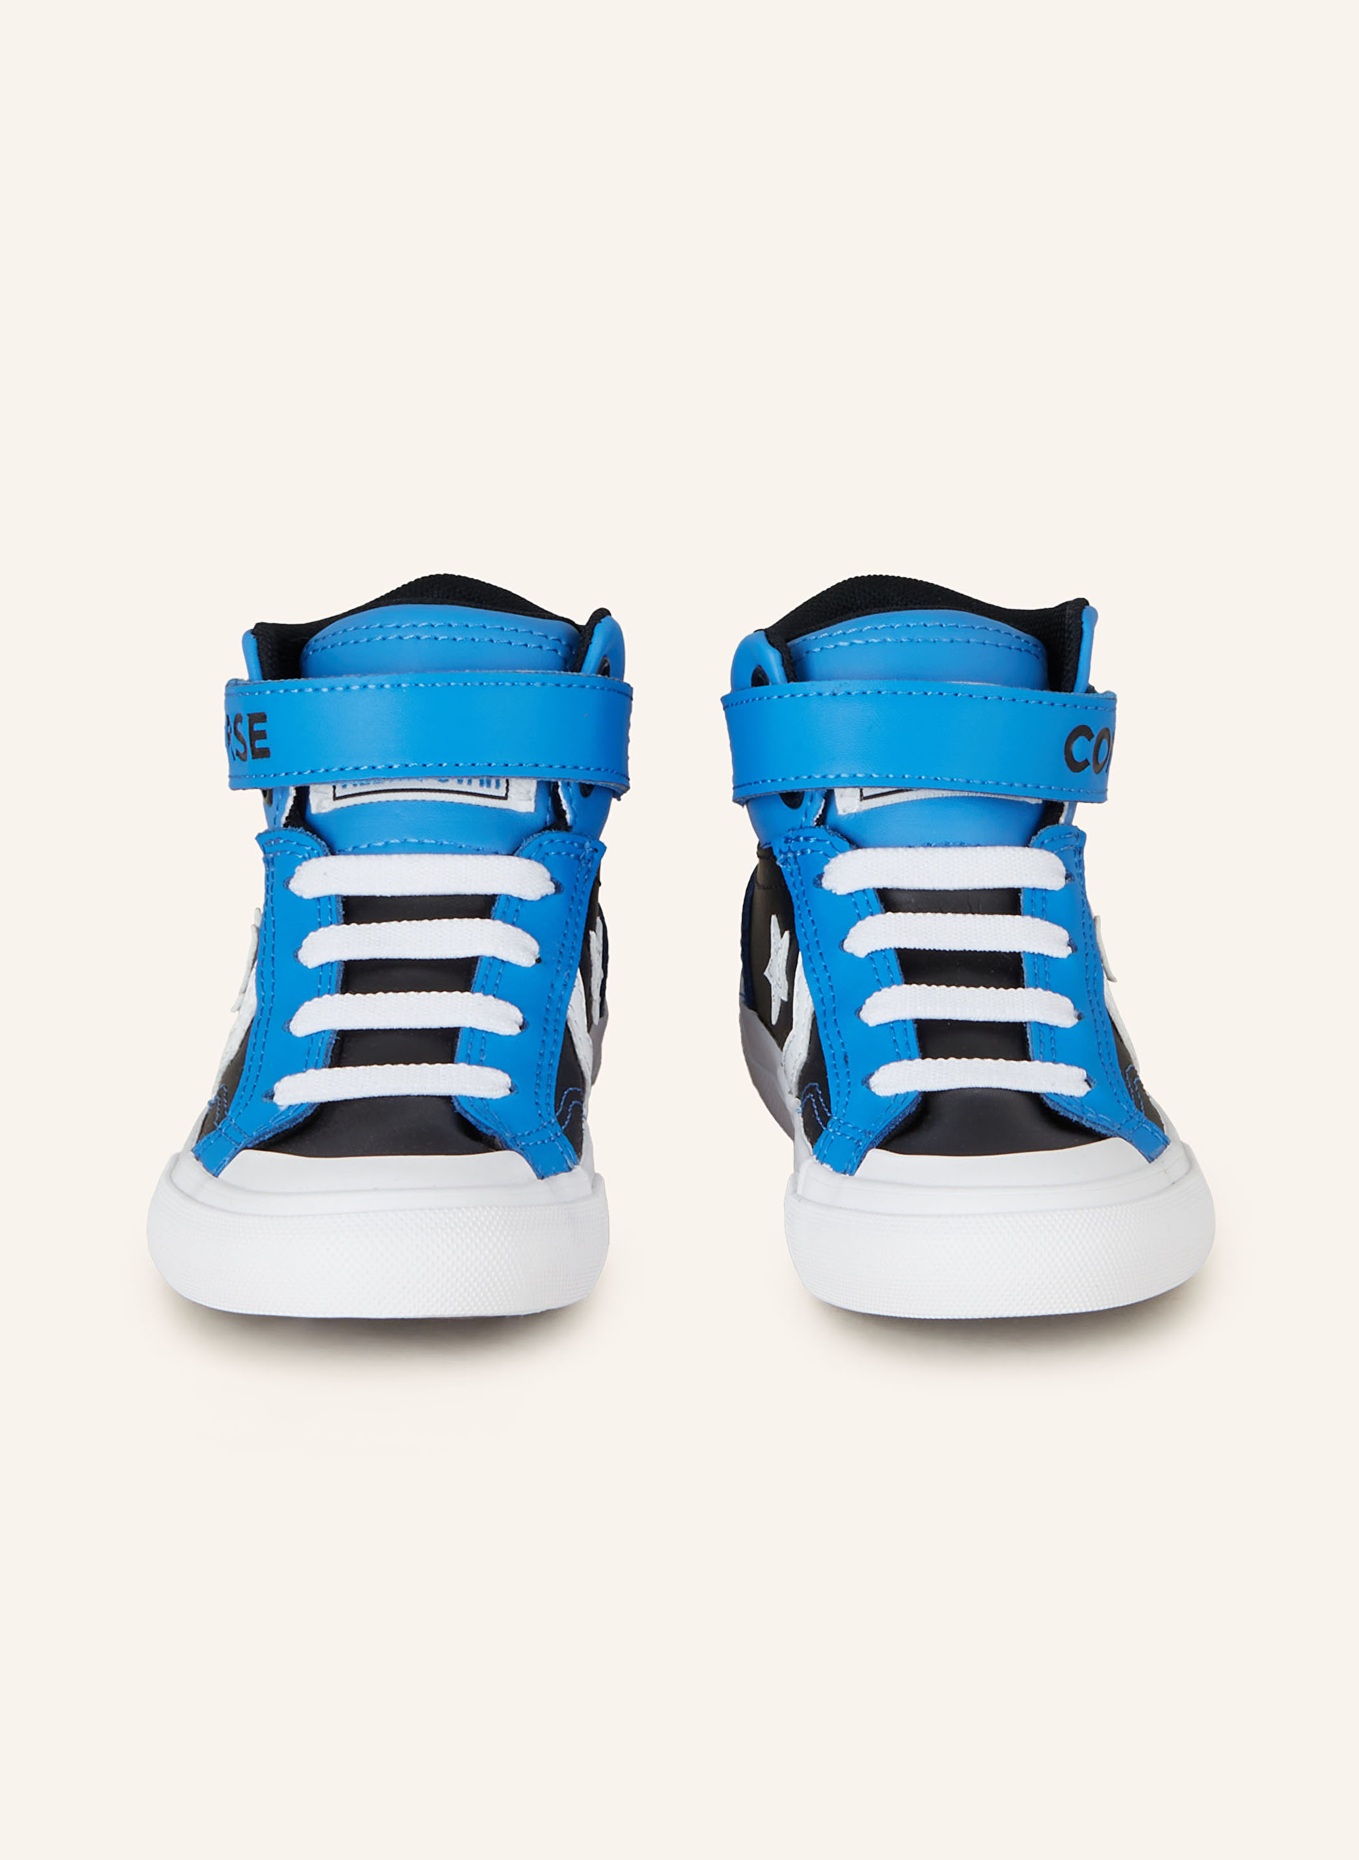 CONVERSE Hightop-Sneaker PRO BLAZE, Farbe: BLAU/ SCHWARZ (Bild 3)